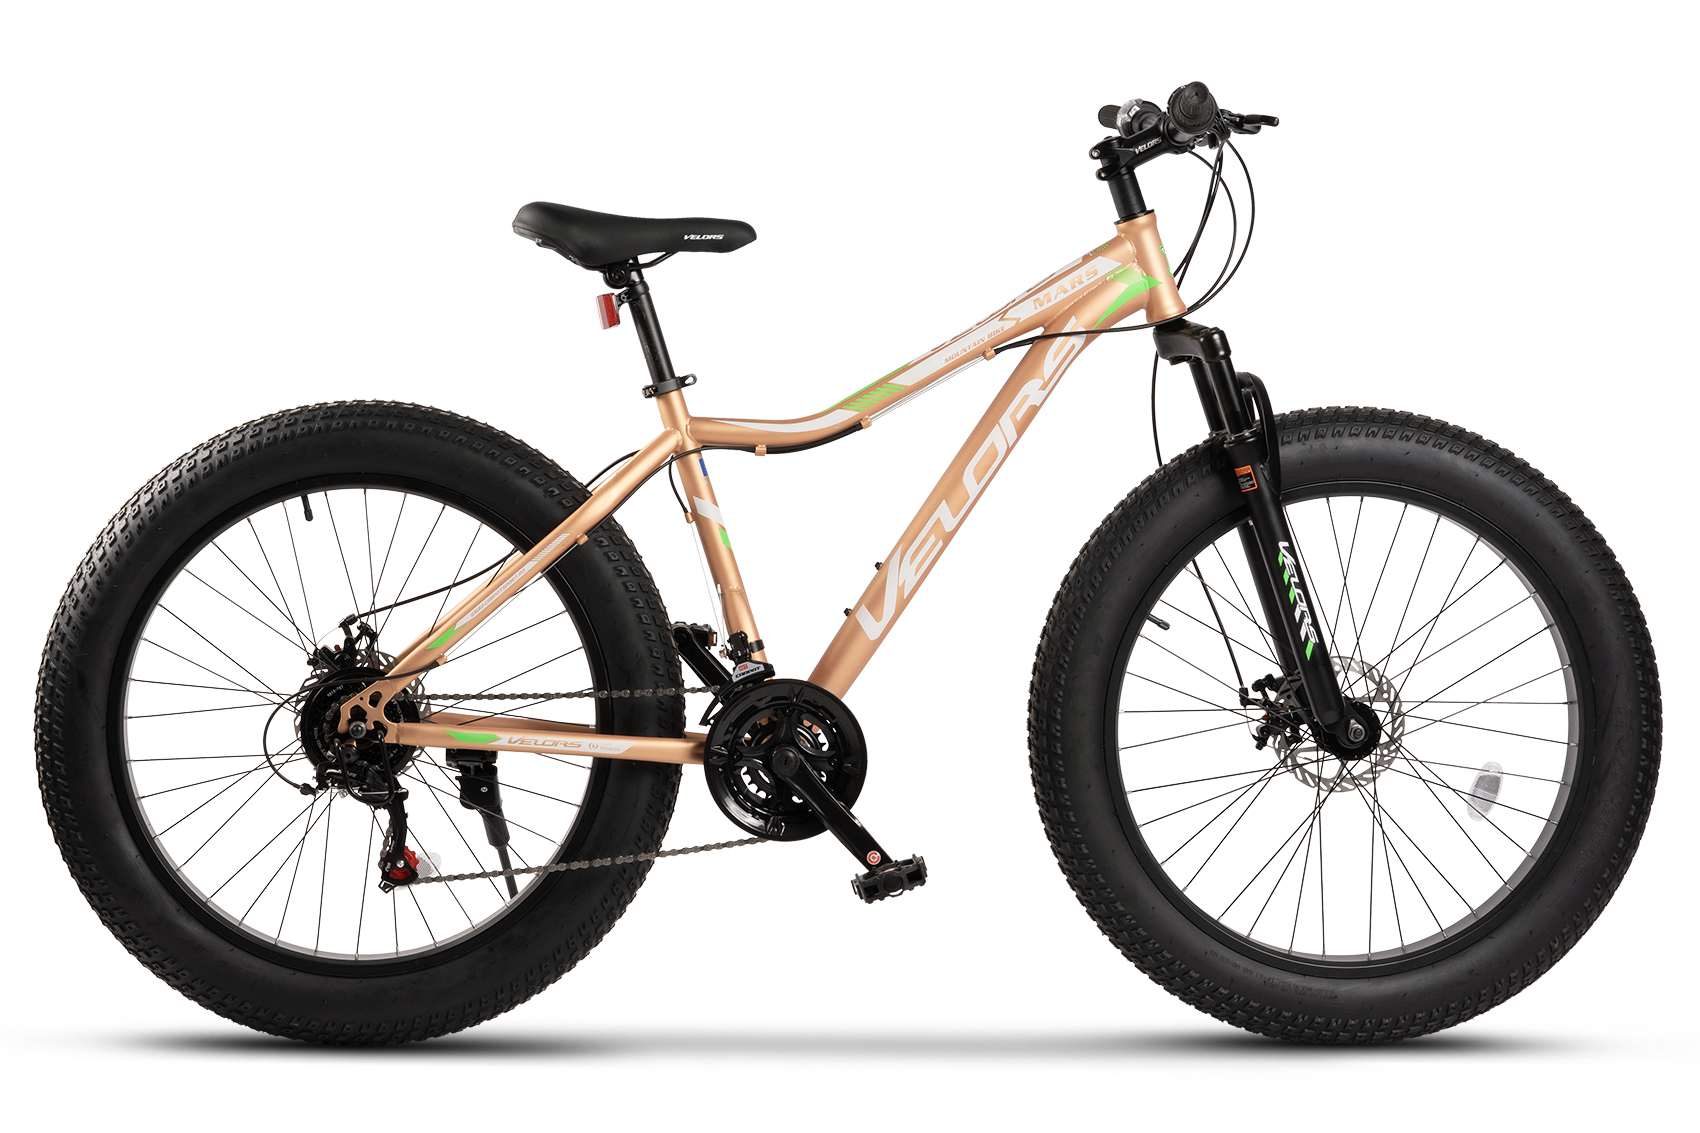 BICICLETE FAT BIKE - Bicicleta Fat-Bike Velors Mars V2605G 26", Maro/Argintiu, carpatsport.ro